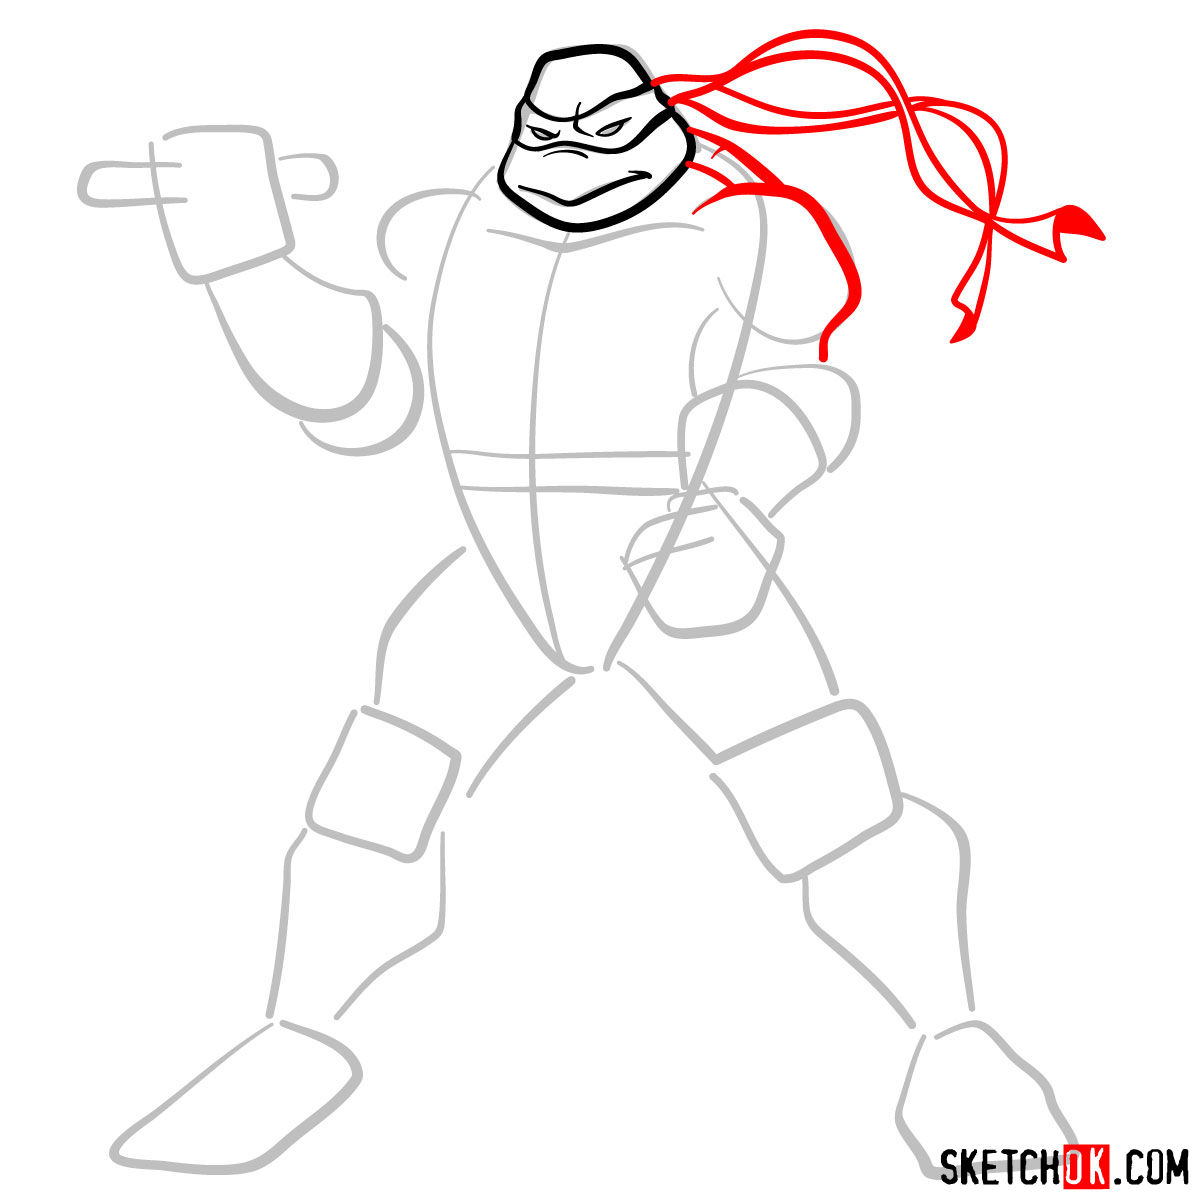 How to draw Michaelangelo ninja turtle - step 04